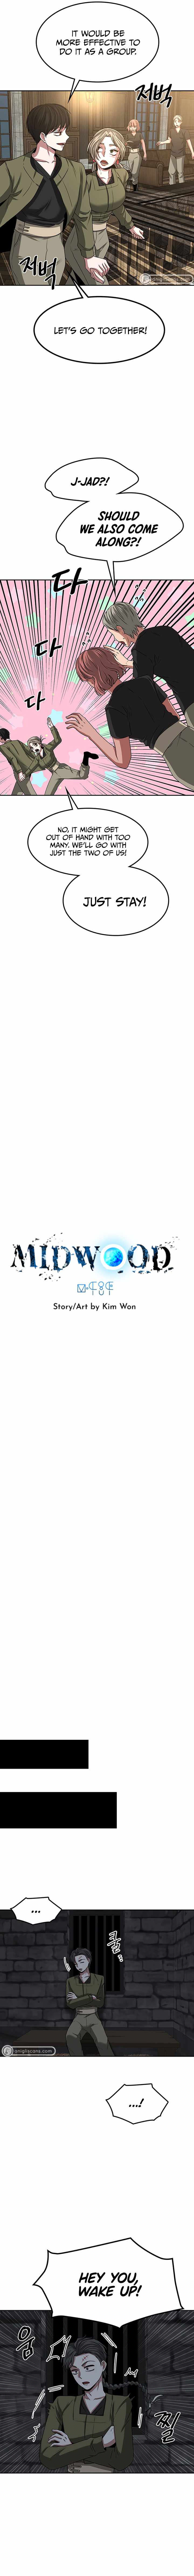 Midwood Chapter 10-eng-li - Page 5